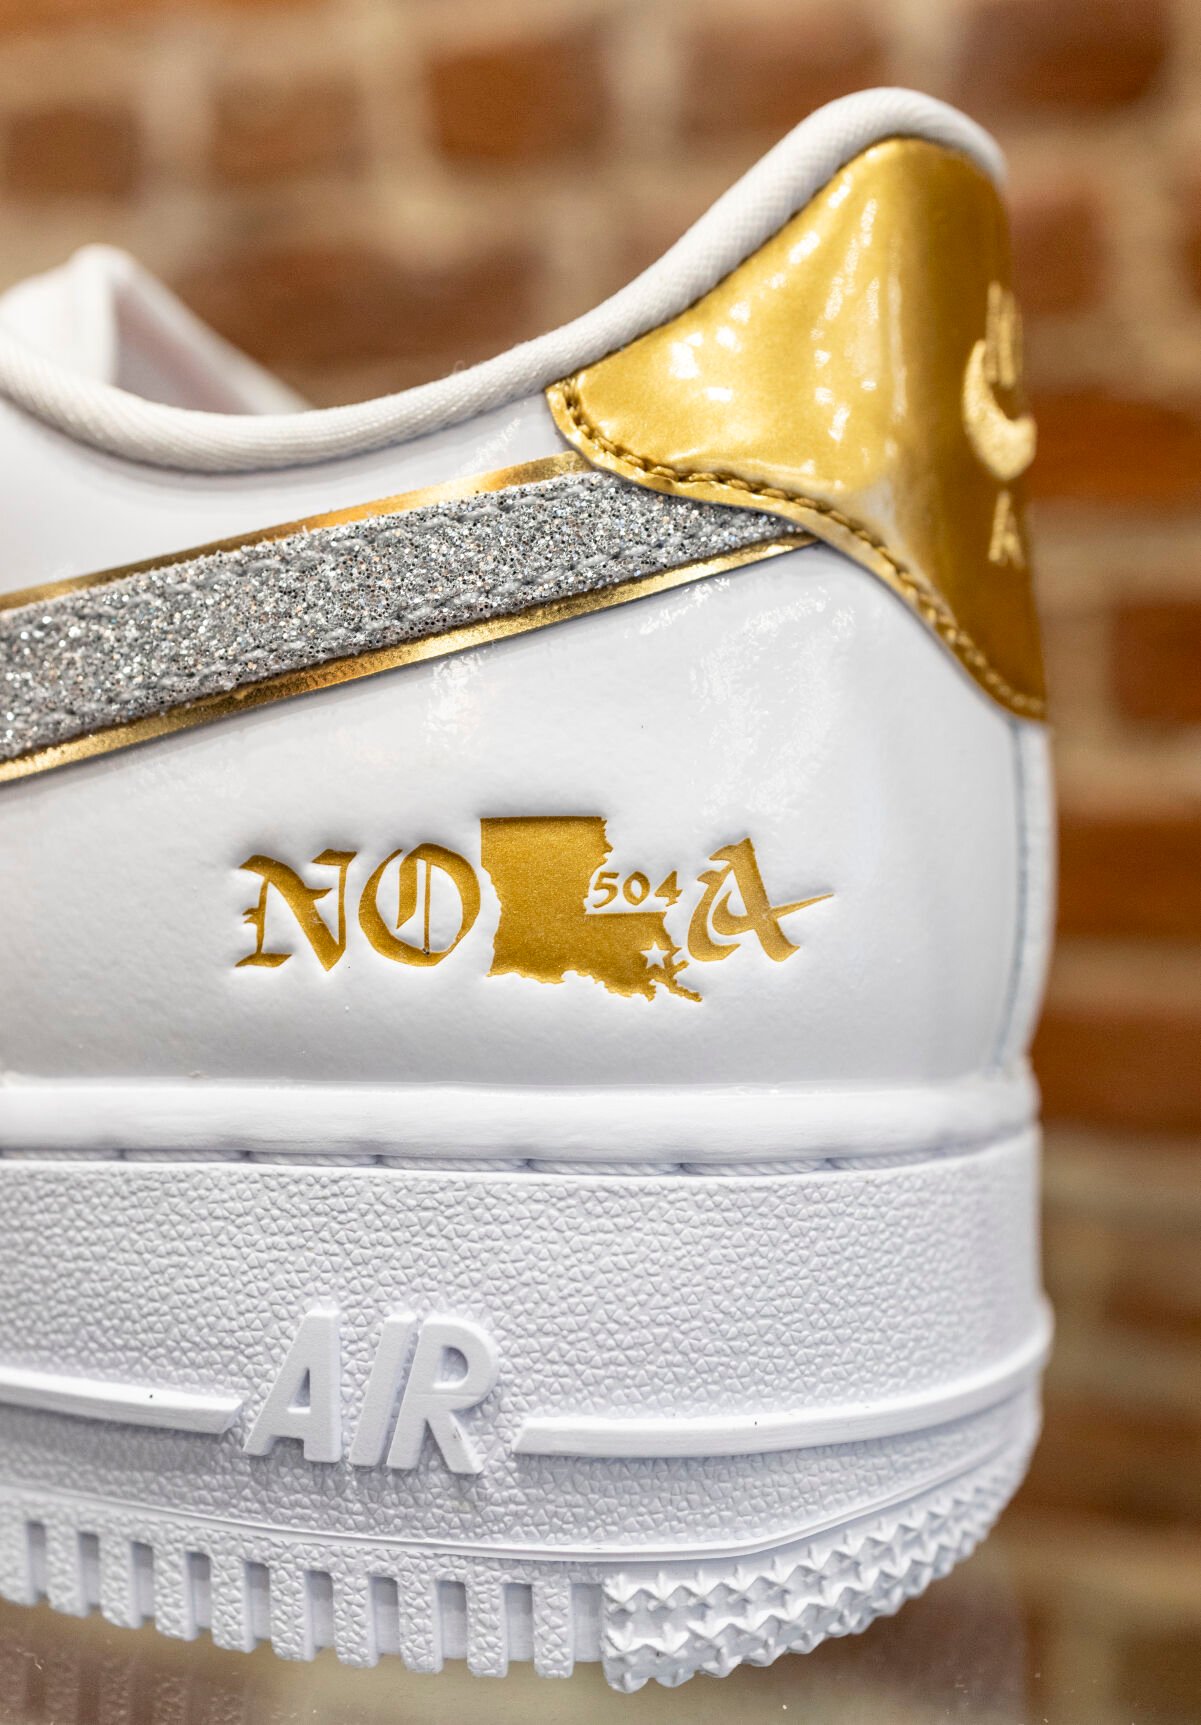 New Nike Air Force 1 sneaker celebrating New Orleans' rap scene